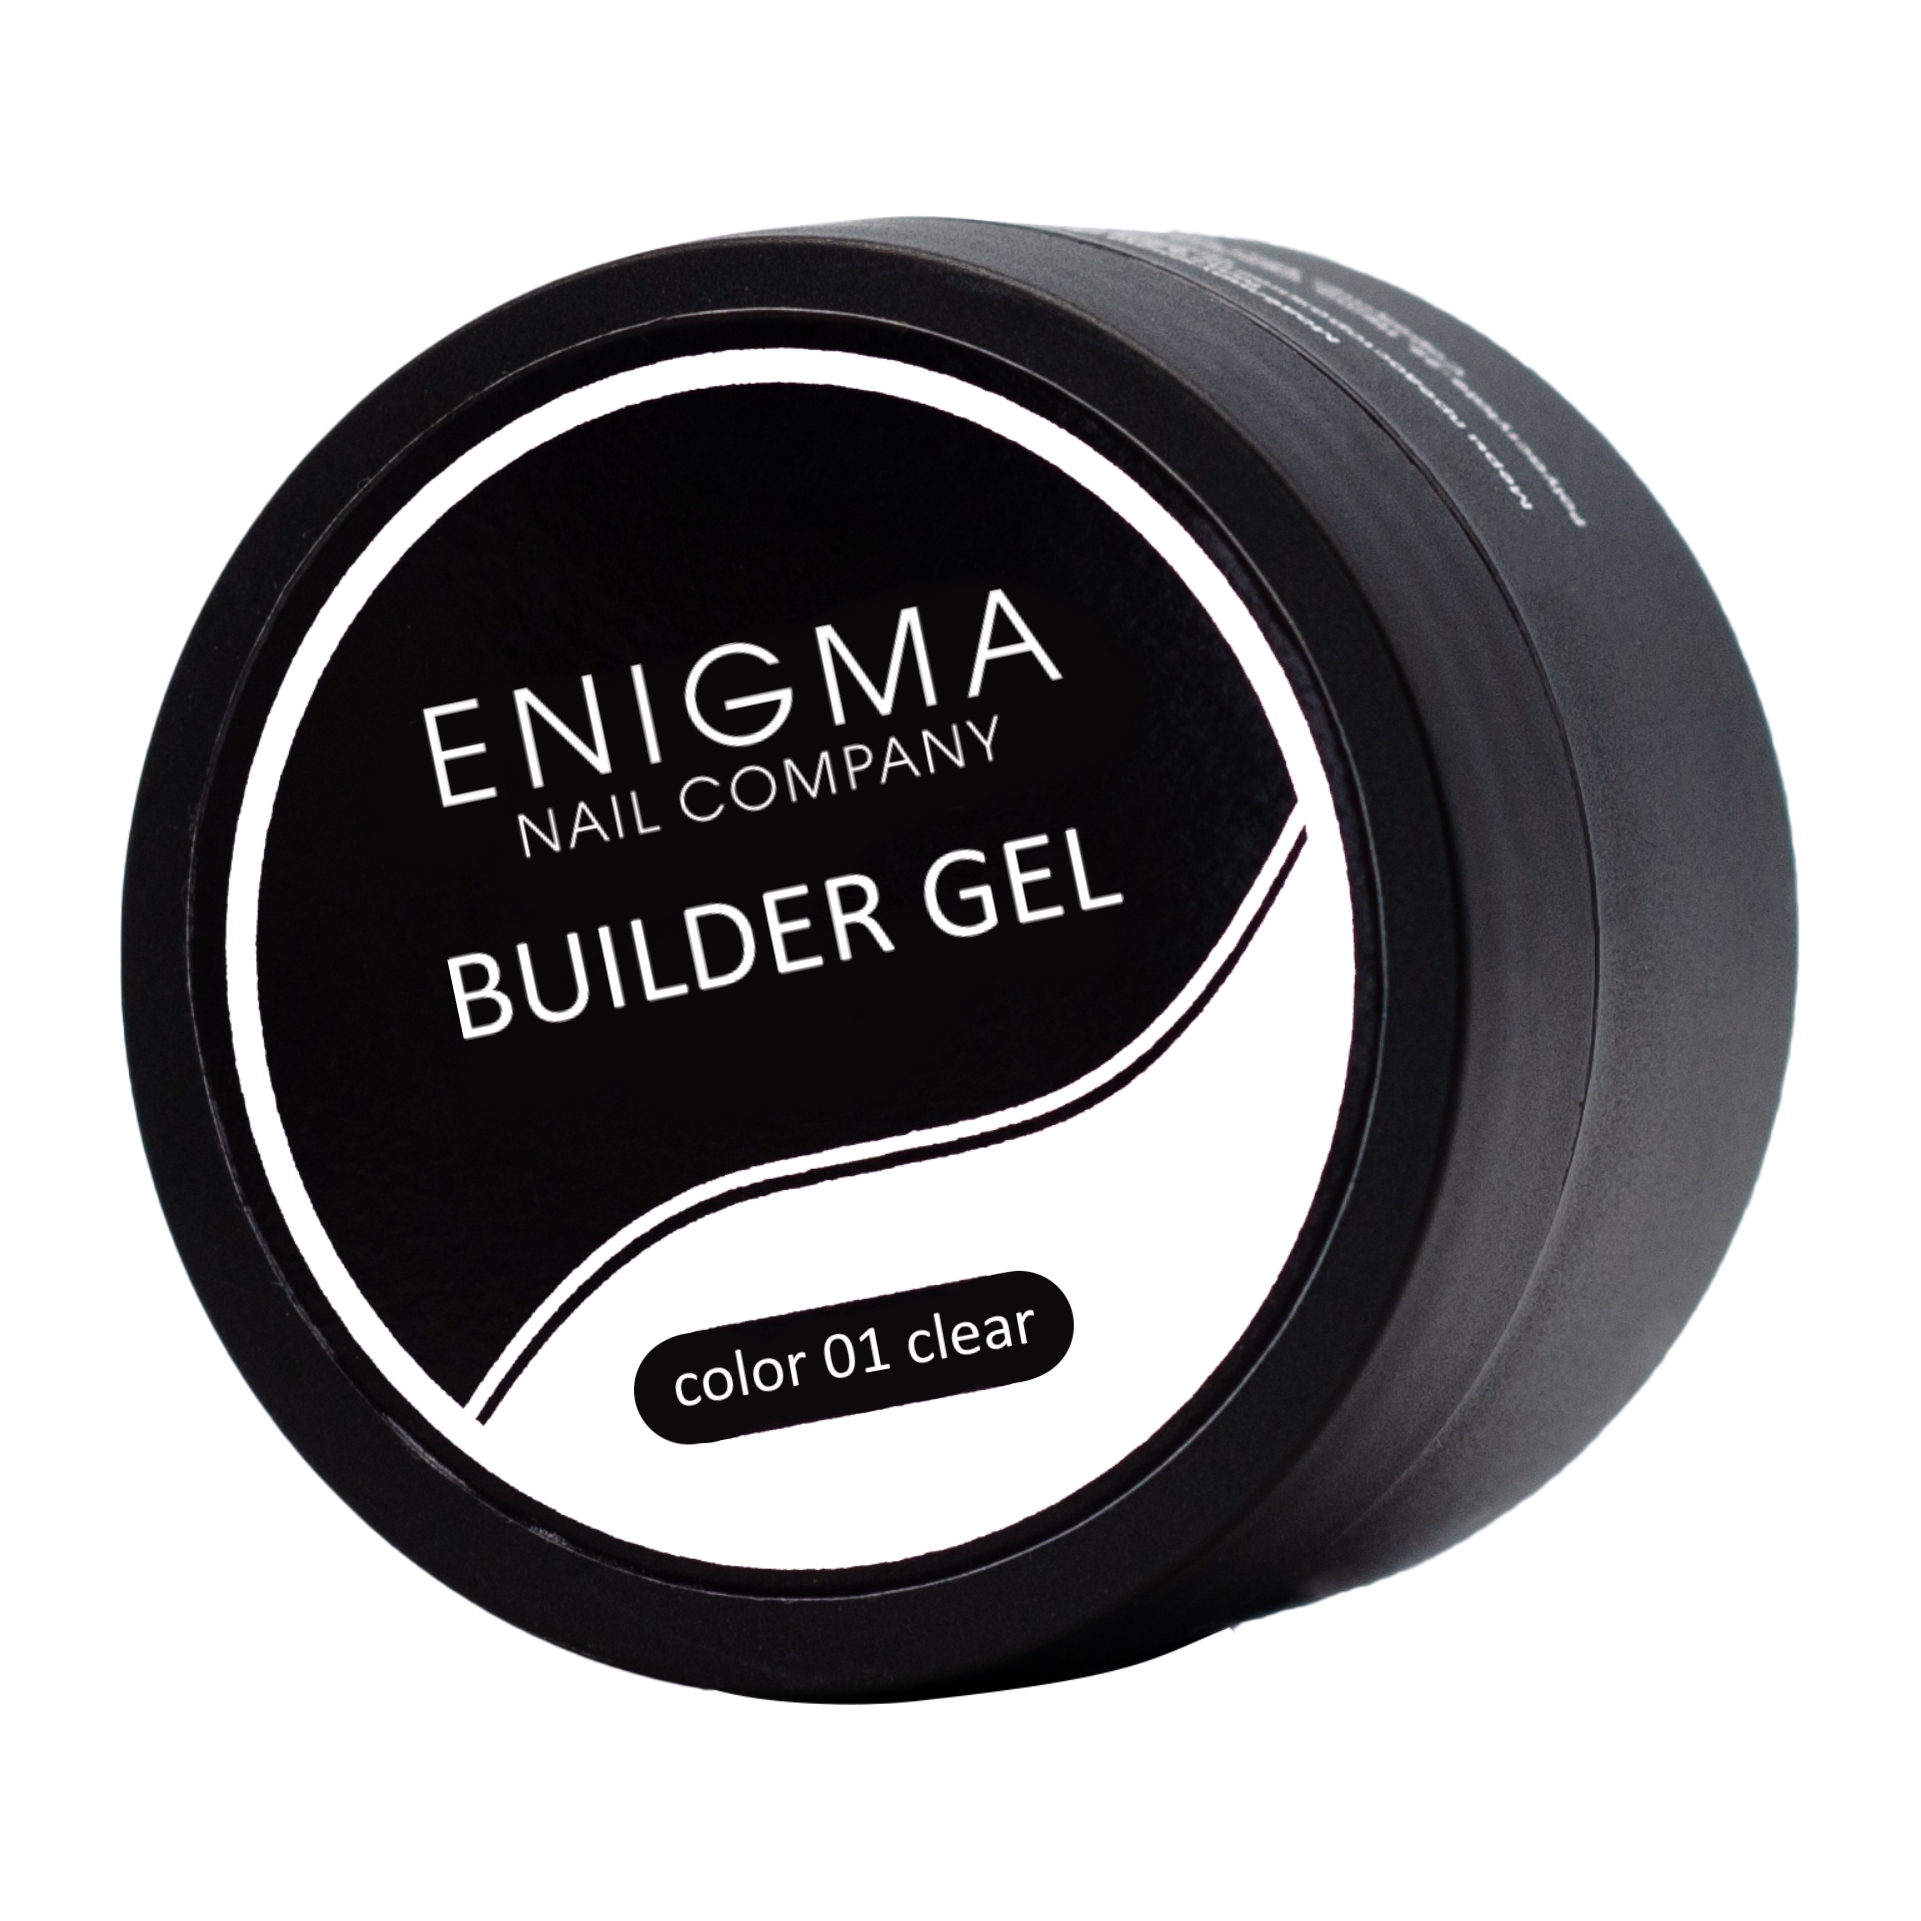 Гель ENIGMA Builder gel 01 clear средняя консистенция, 15 мл